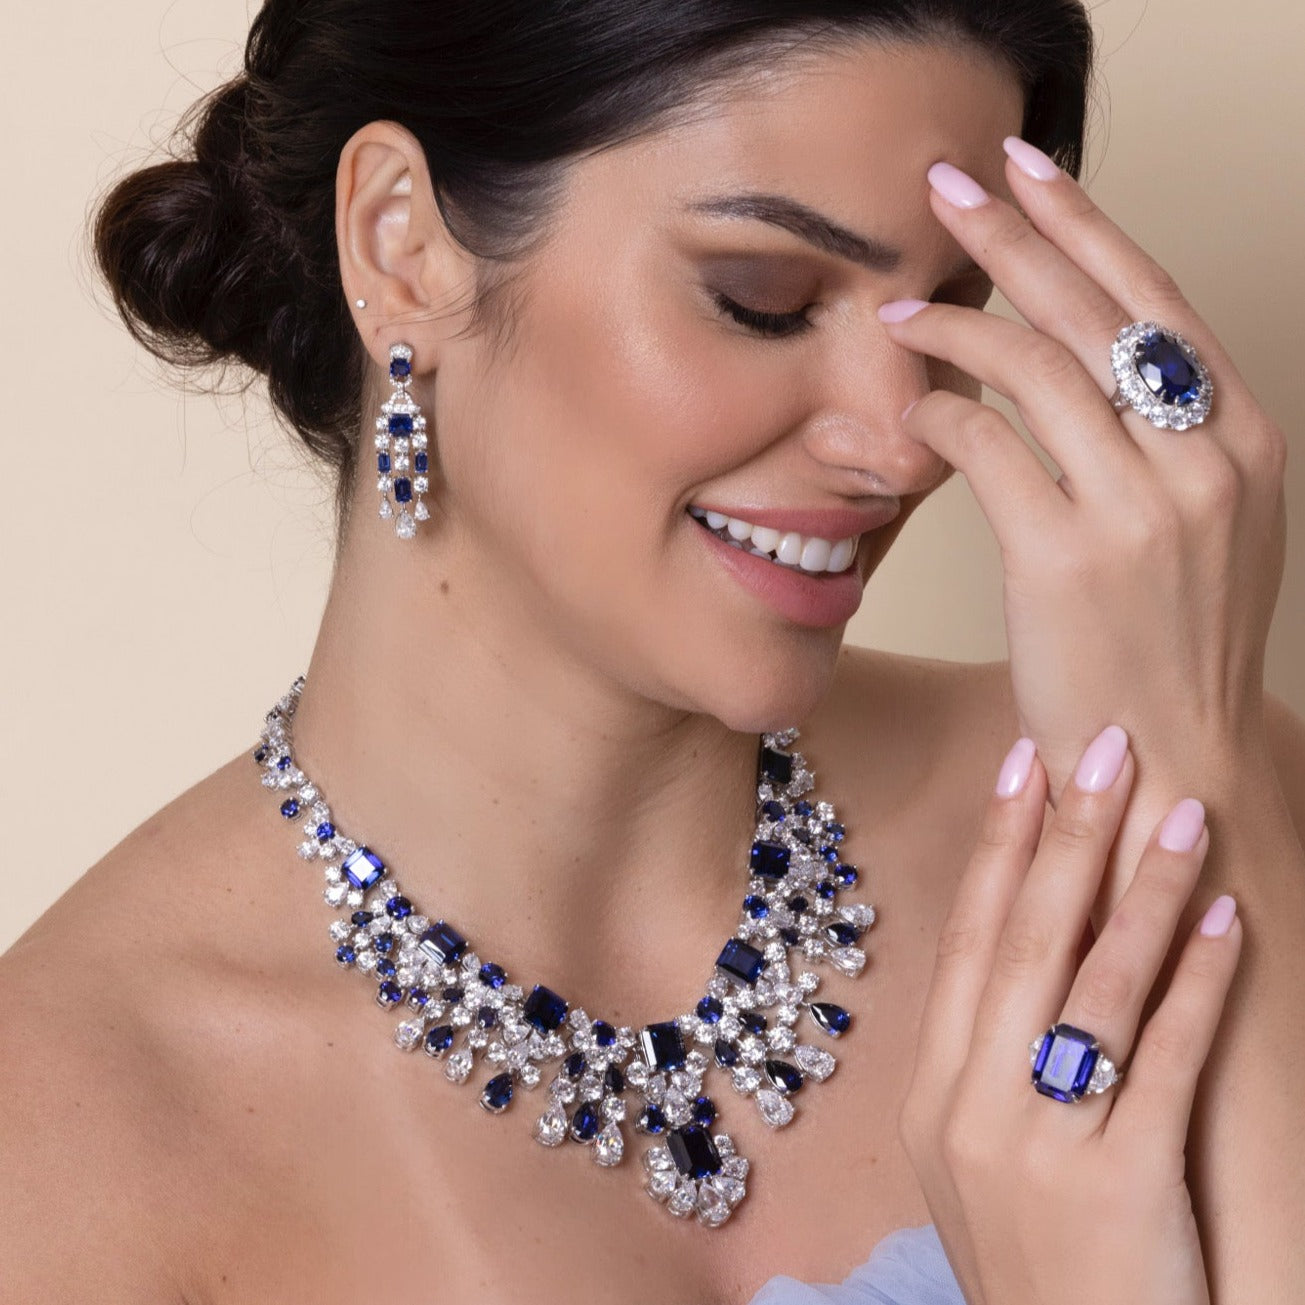 Untreated Blue Sapphire Ring-18kt Emerald Cut Natural Ceylon Sapphire